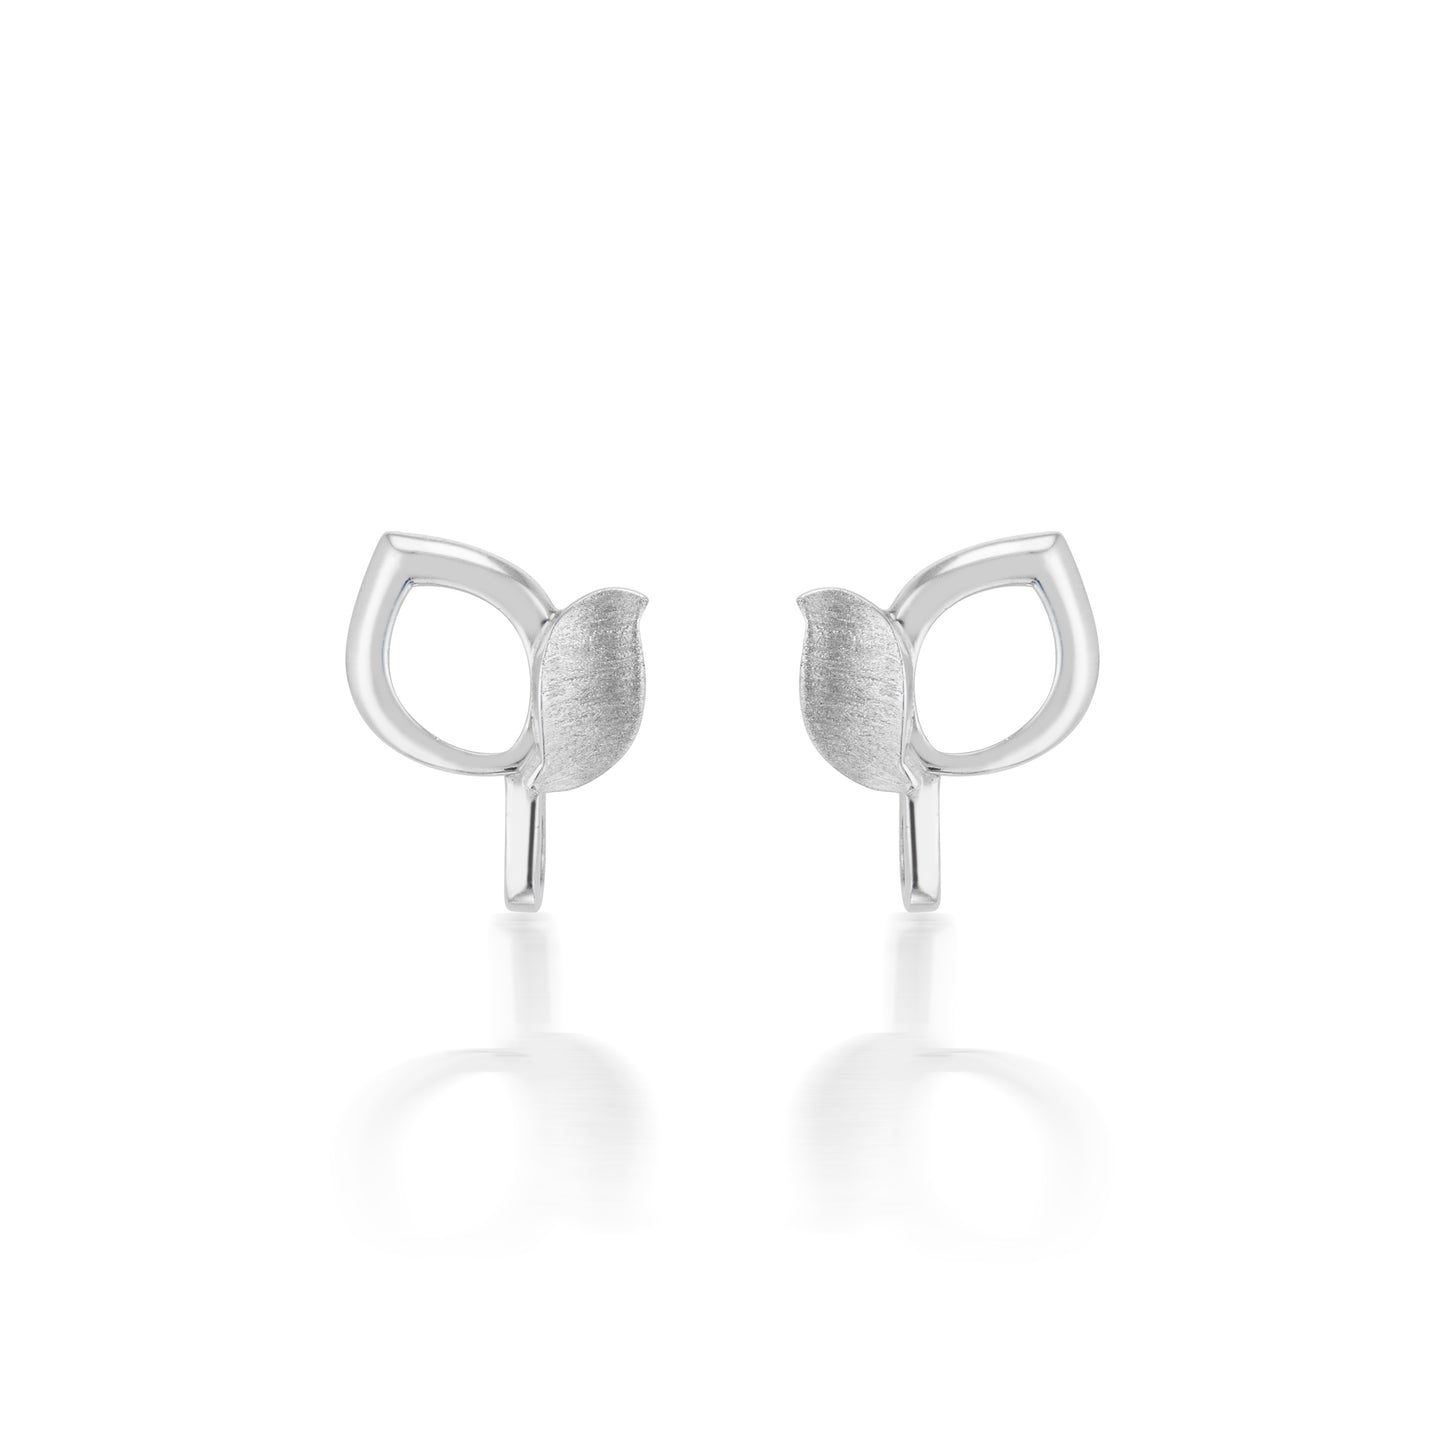 Bloom Stud Earrings in Sterling Silver